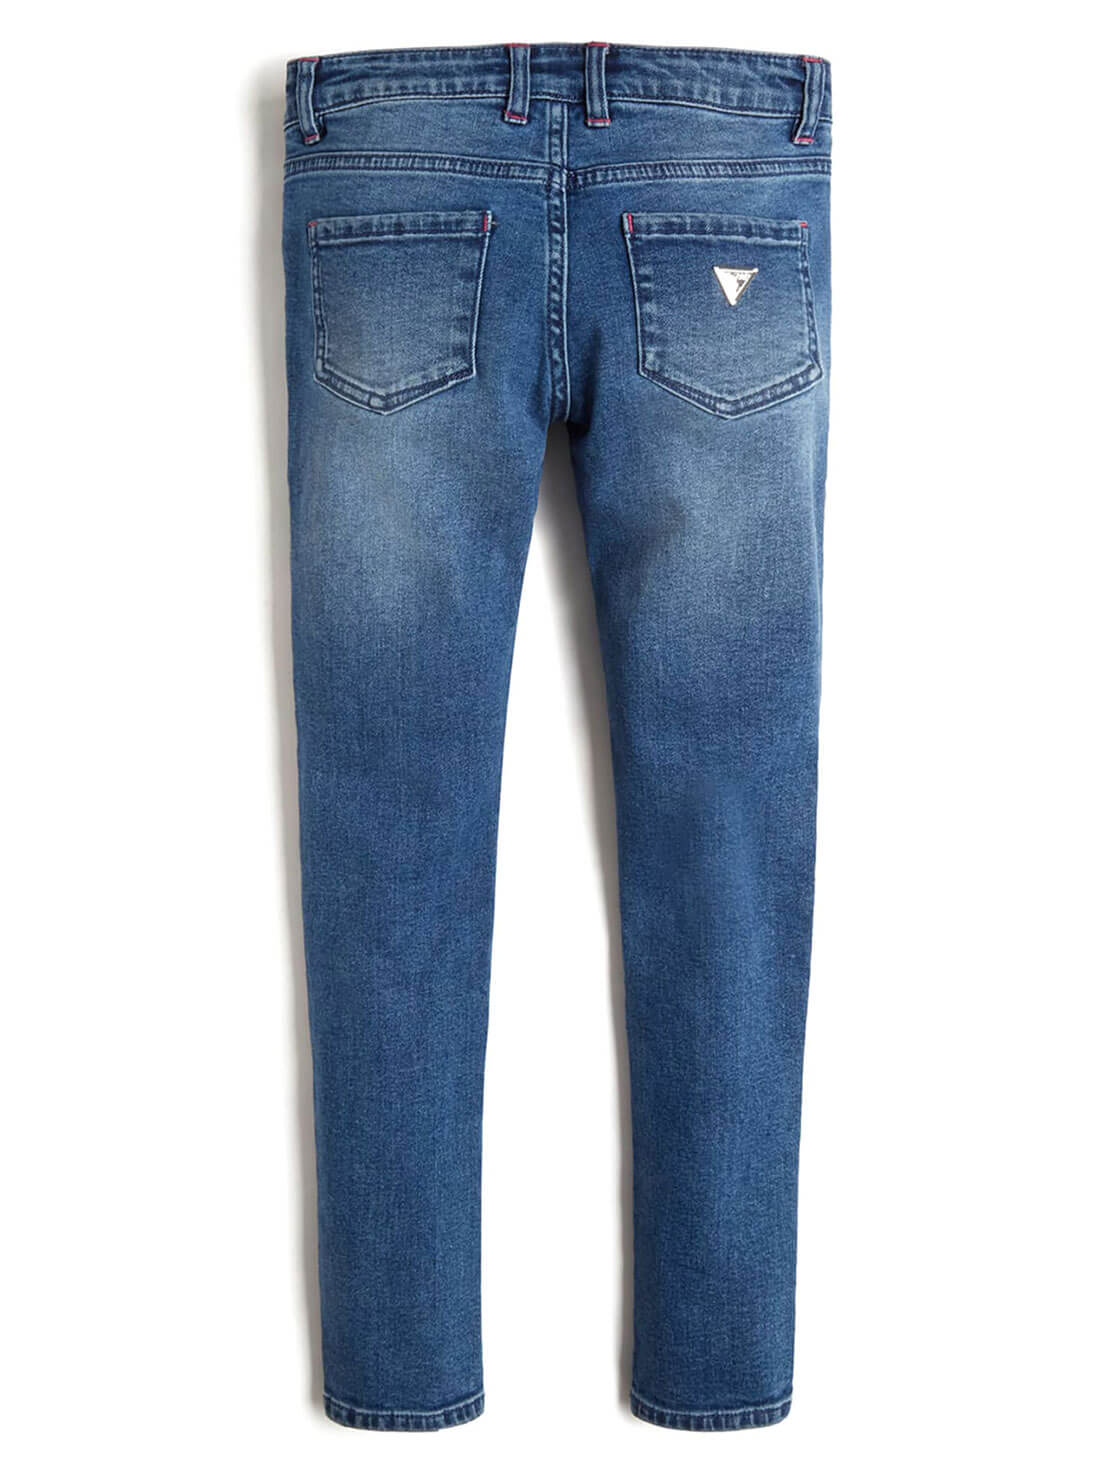 GUESS Big Girls Embroidered Skinny Denim Jeans In Glittering Wash (7-16) J1YA26D4G60 Back View